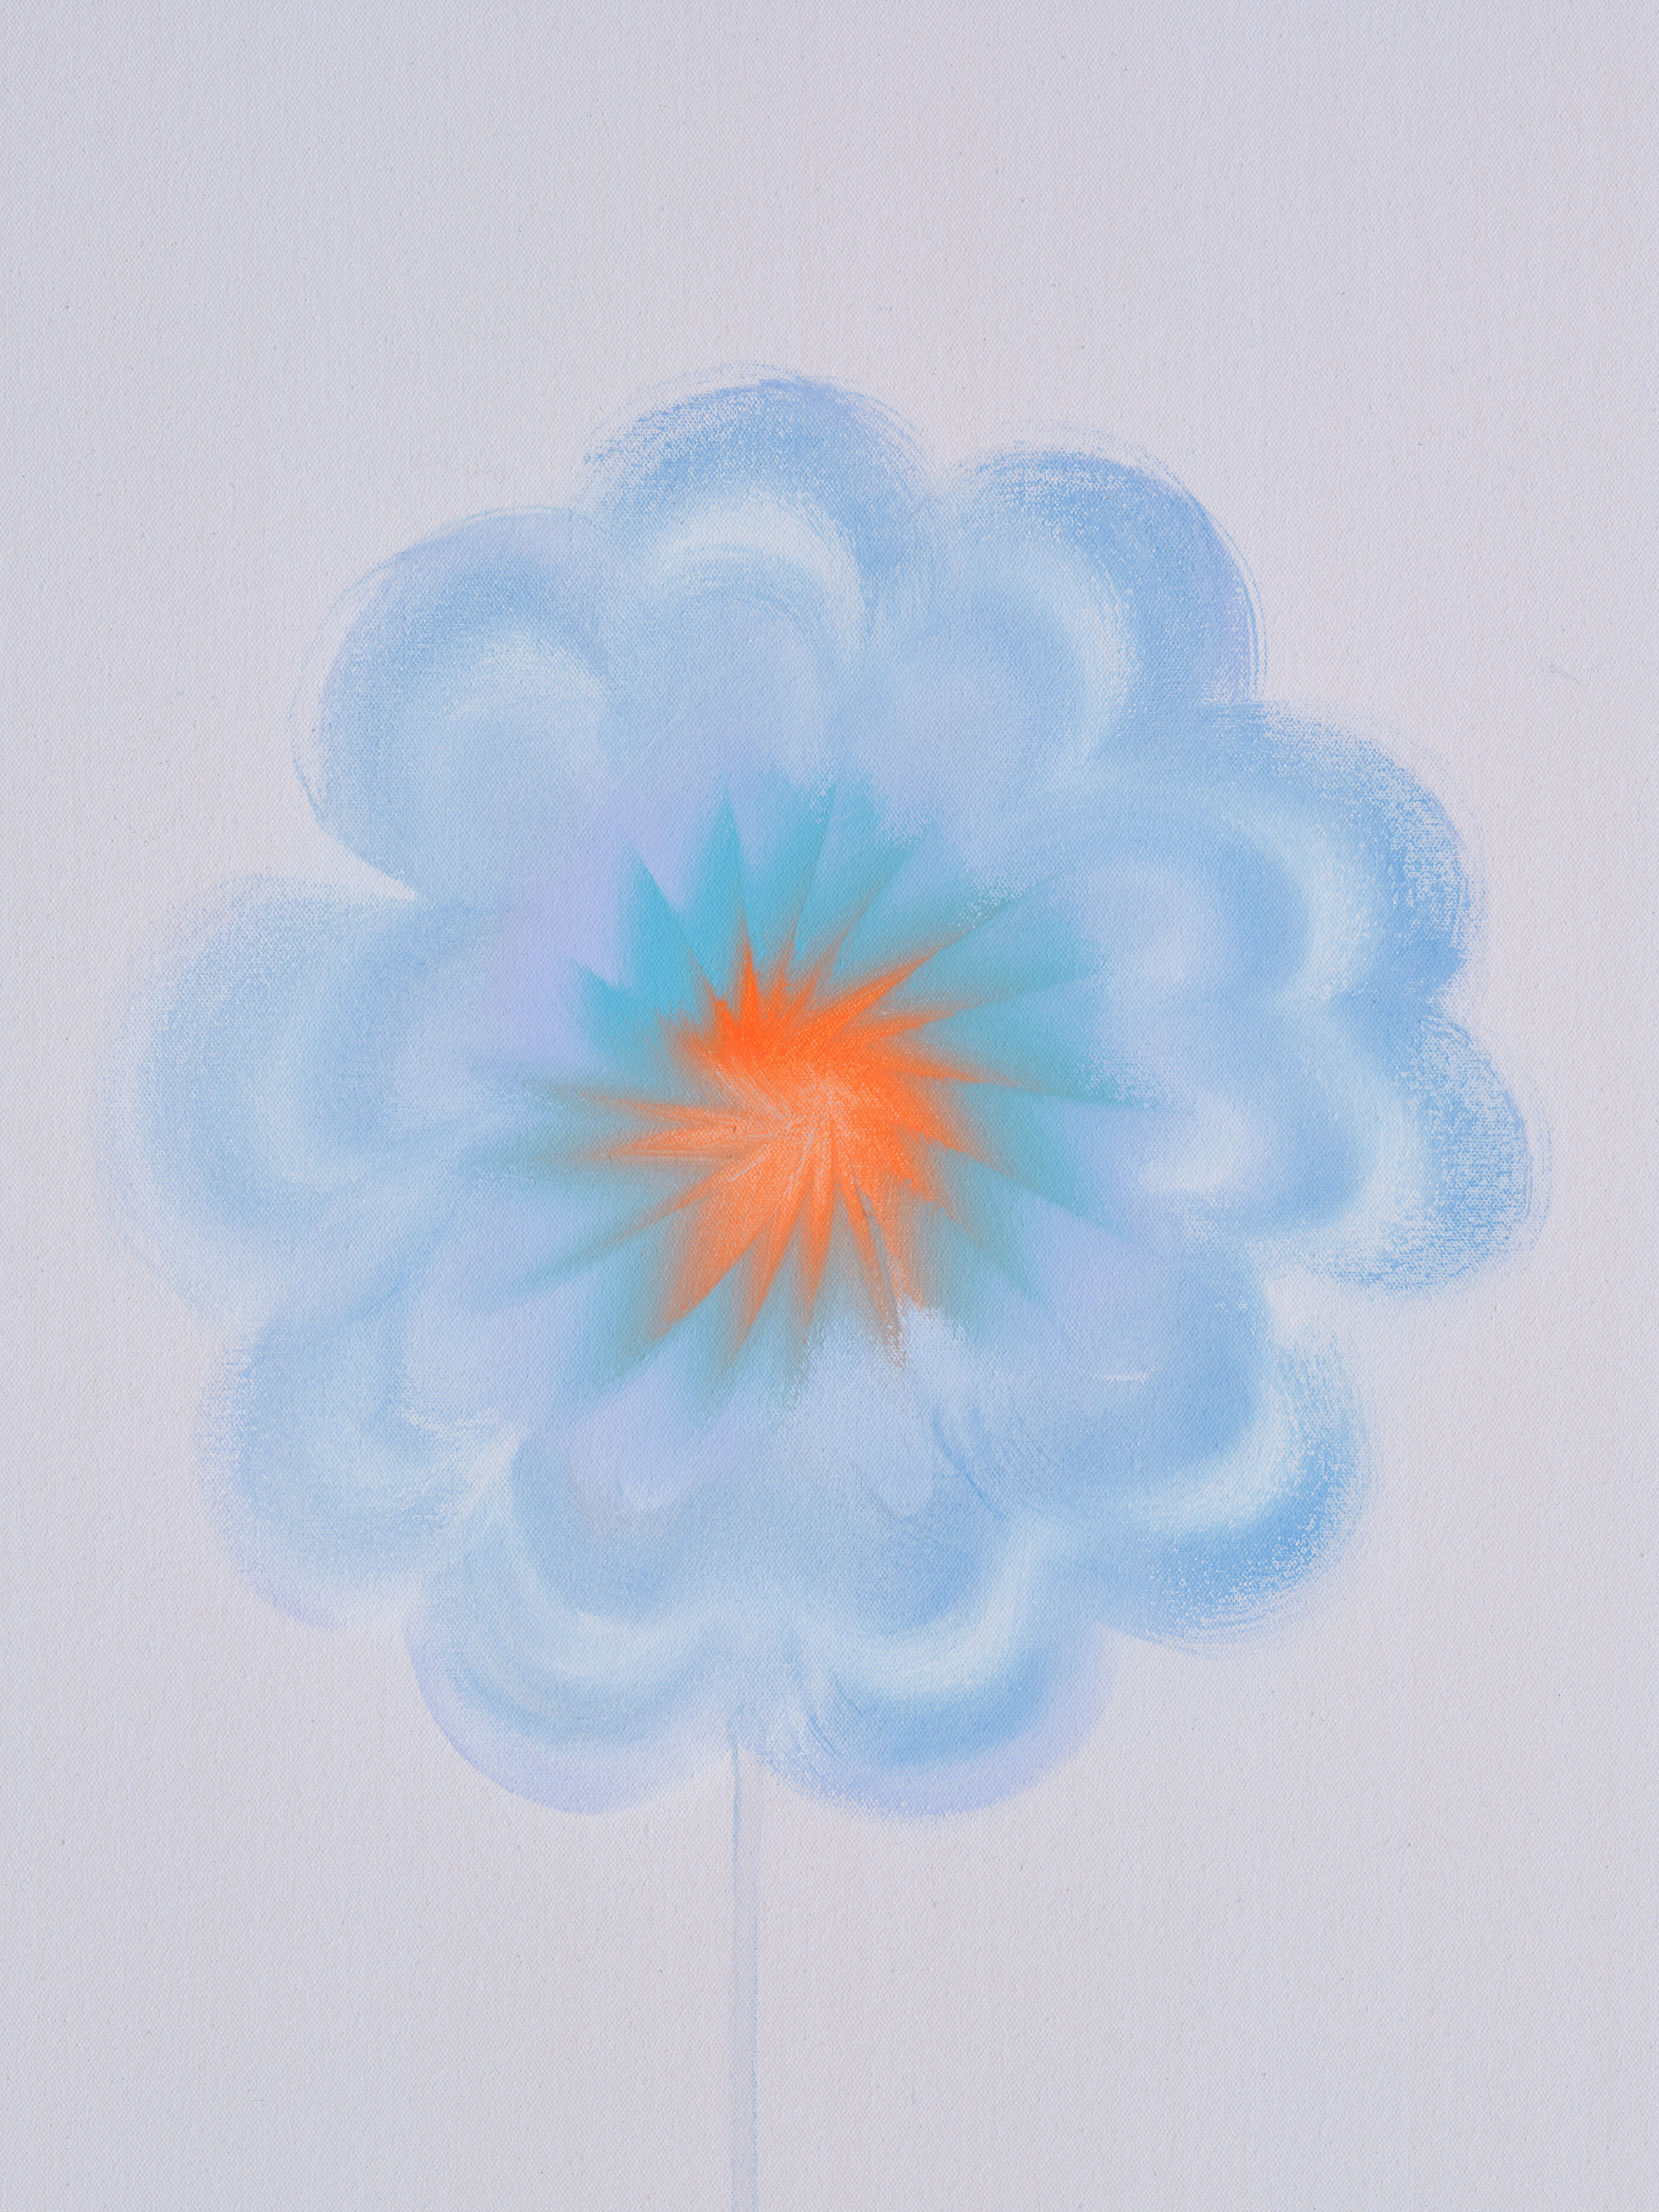 A detail of Wanda Koop’s “Sleepingwalking” with one blue flower with an orange center 